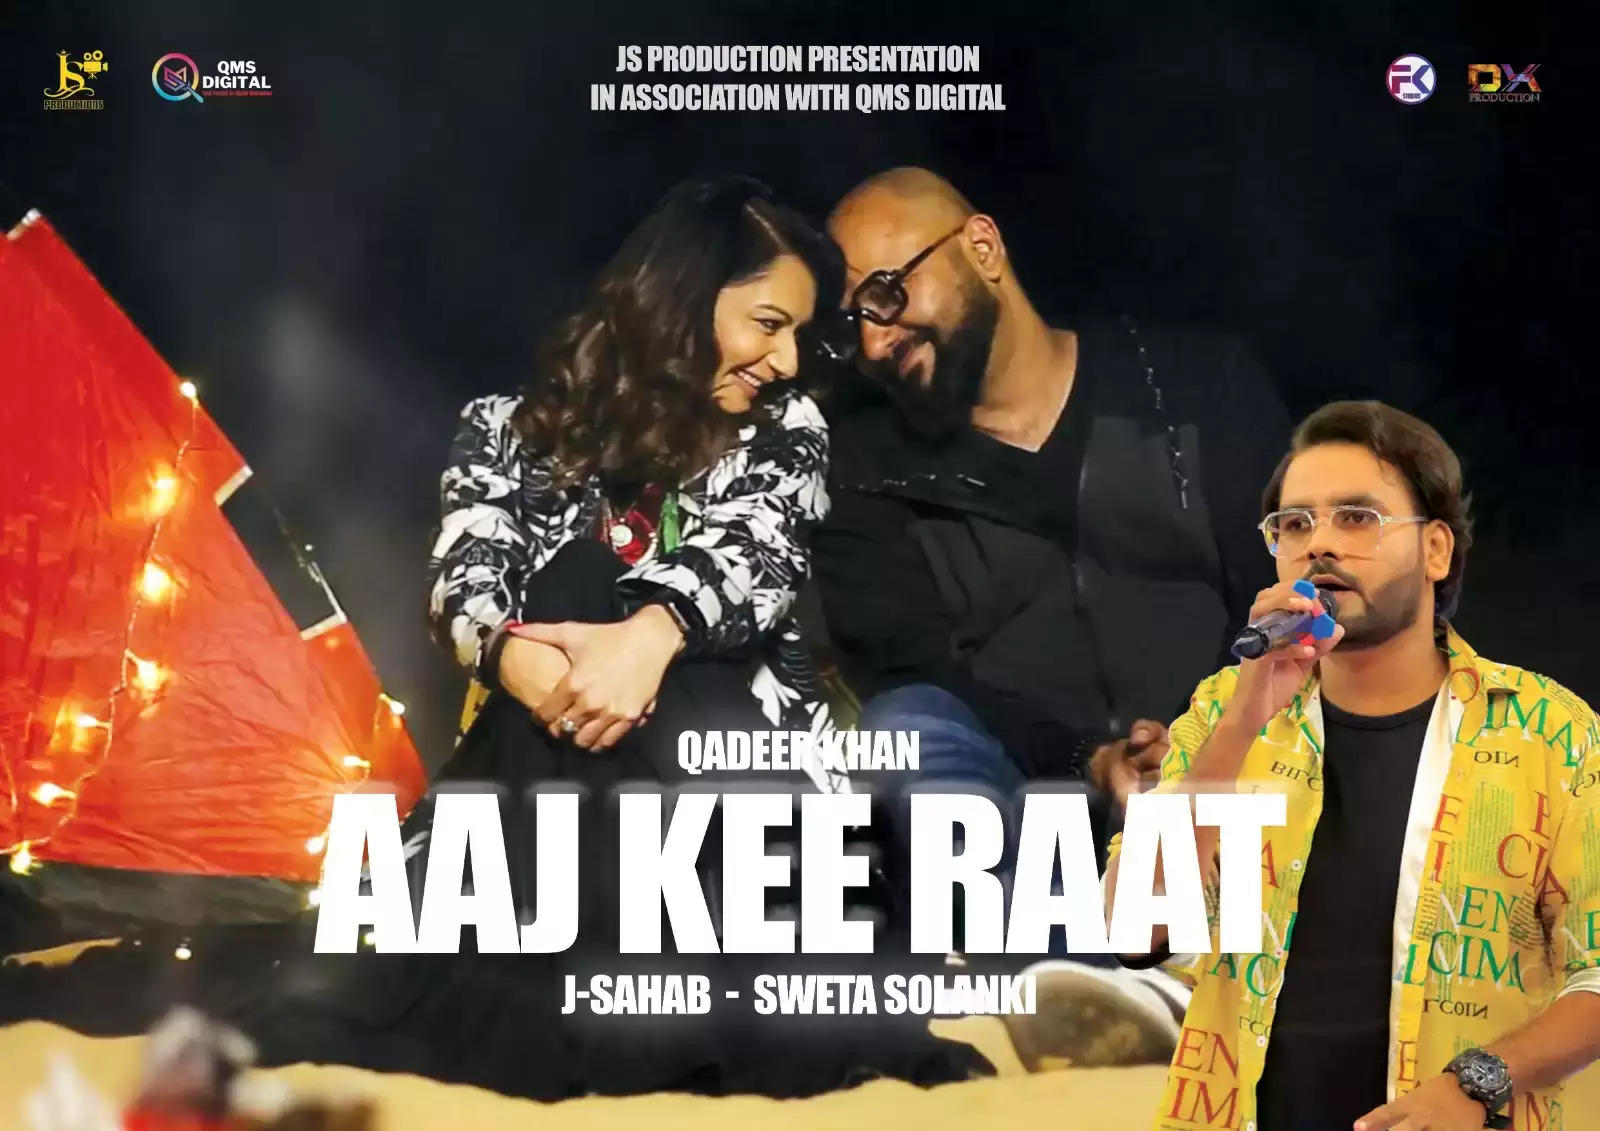 AAJ KEE RAAT: A Musical Ode to Love and Farewell With Sweta Solanki & J Sahab